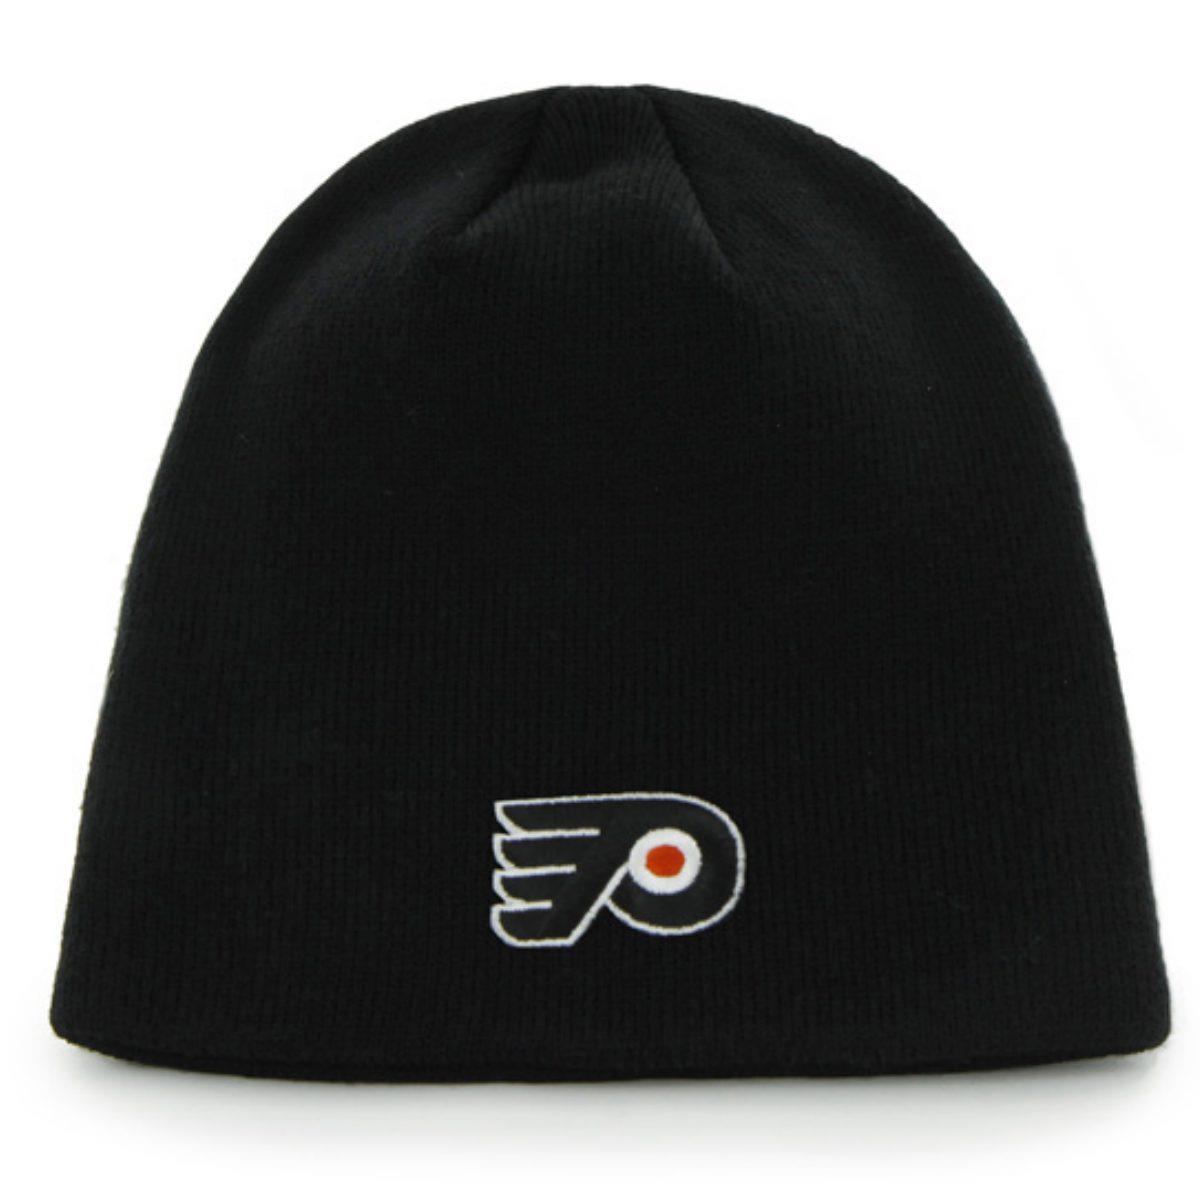 Philadelphia Flyers 47 Brand Black Knit Beanie Hat Cap